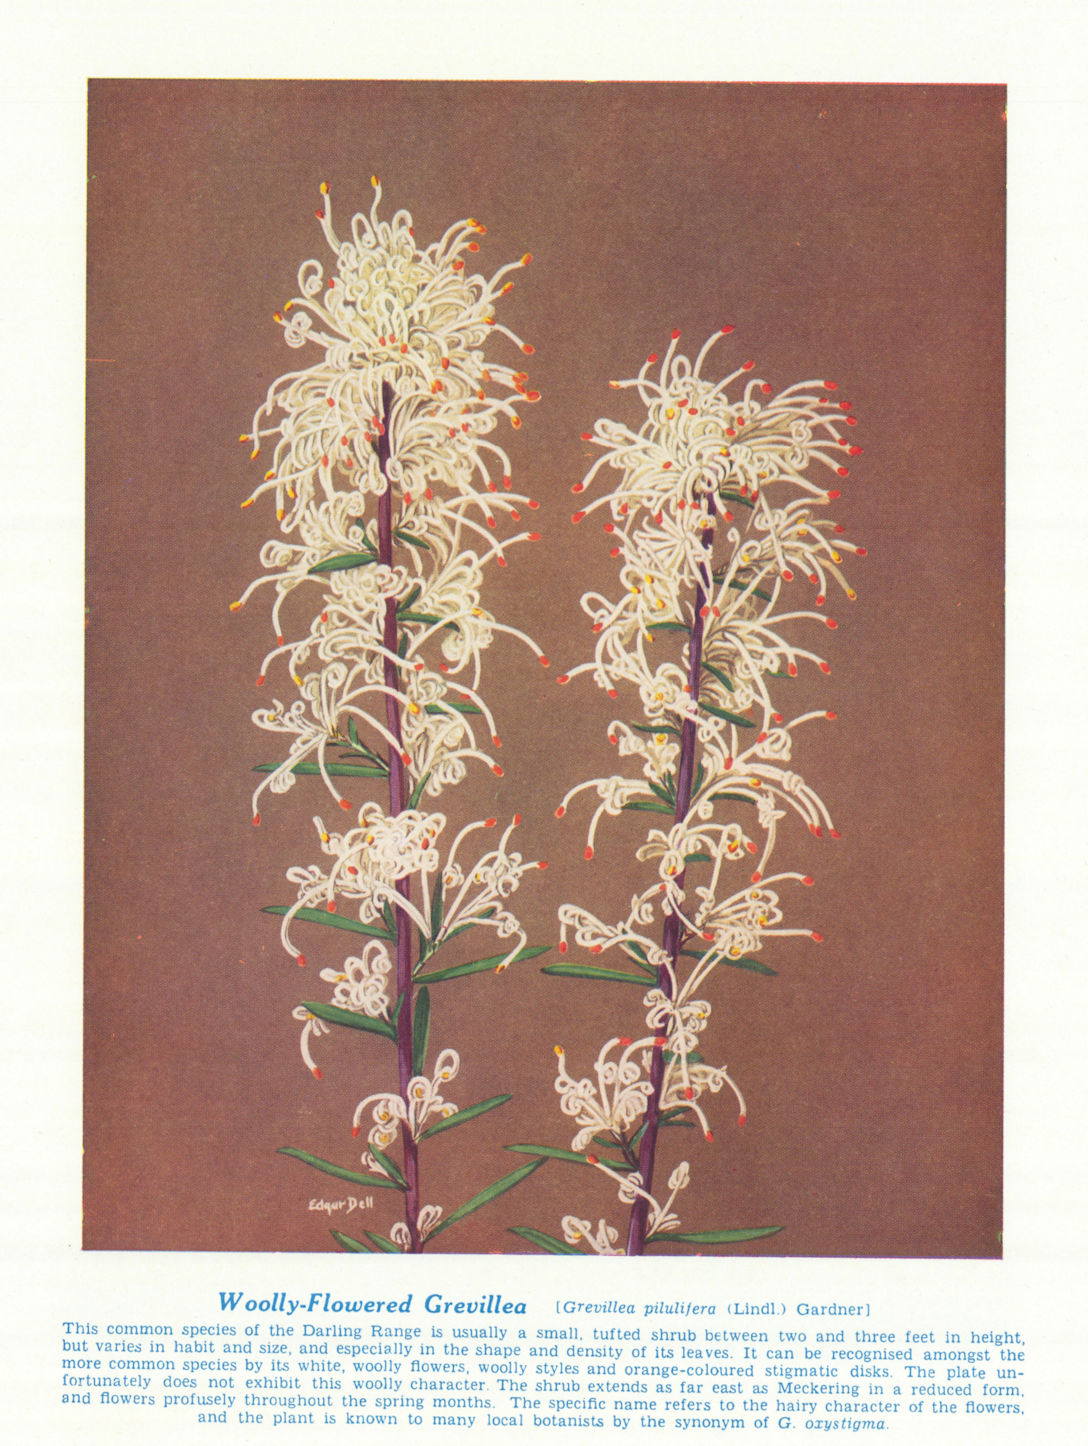 Woolly-flowered Grevillea (Grevillea pilulifera). Australian Wild Flowers 1950